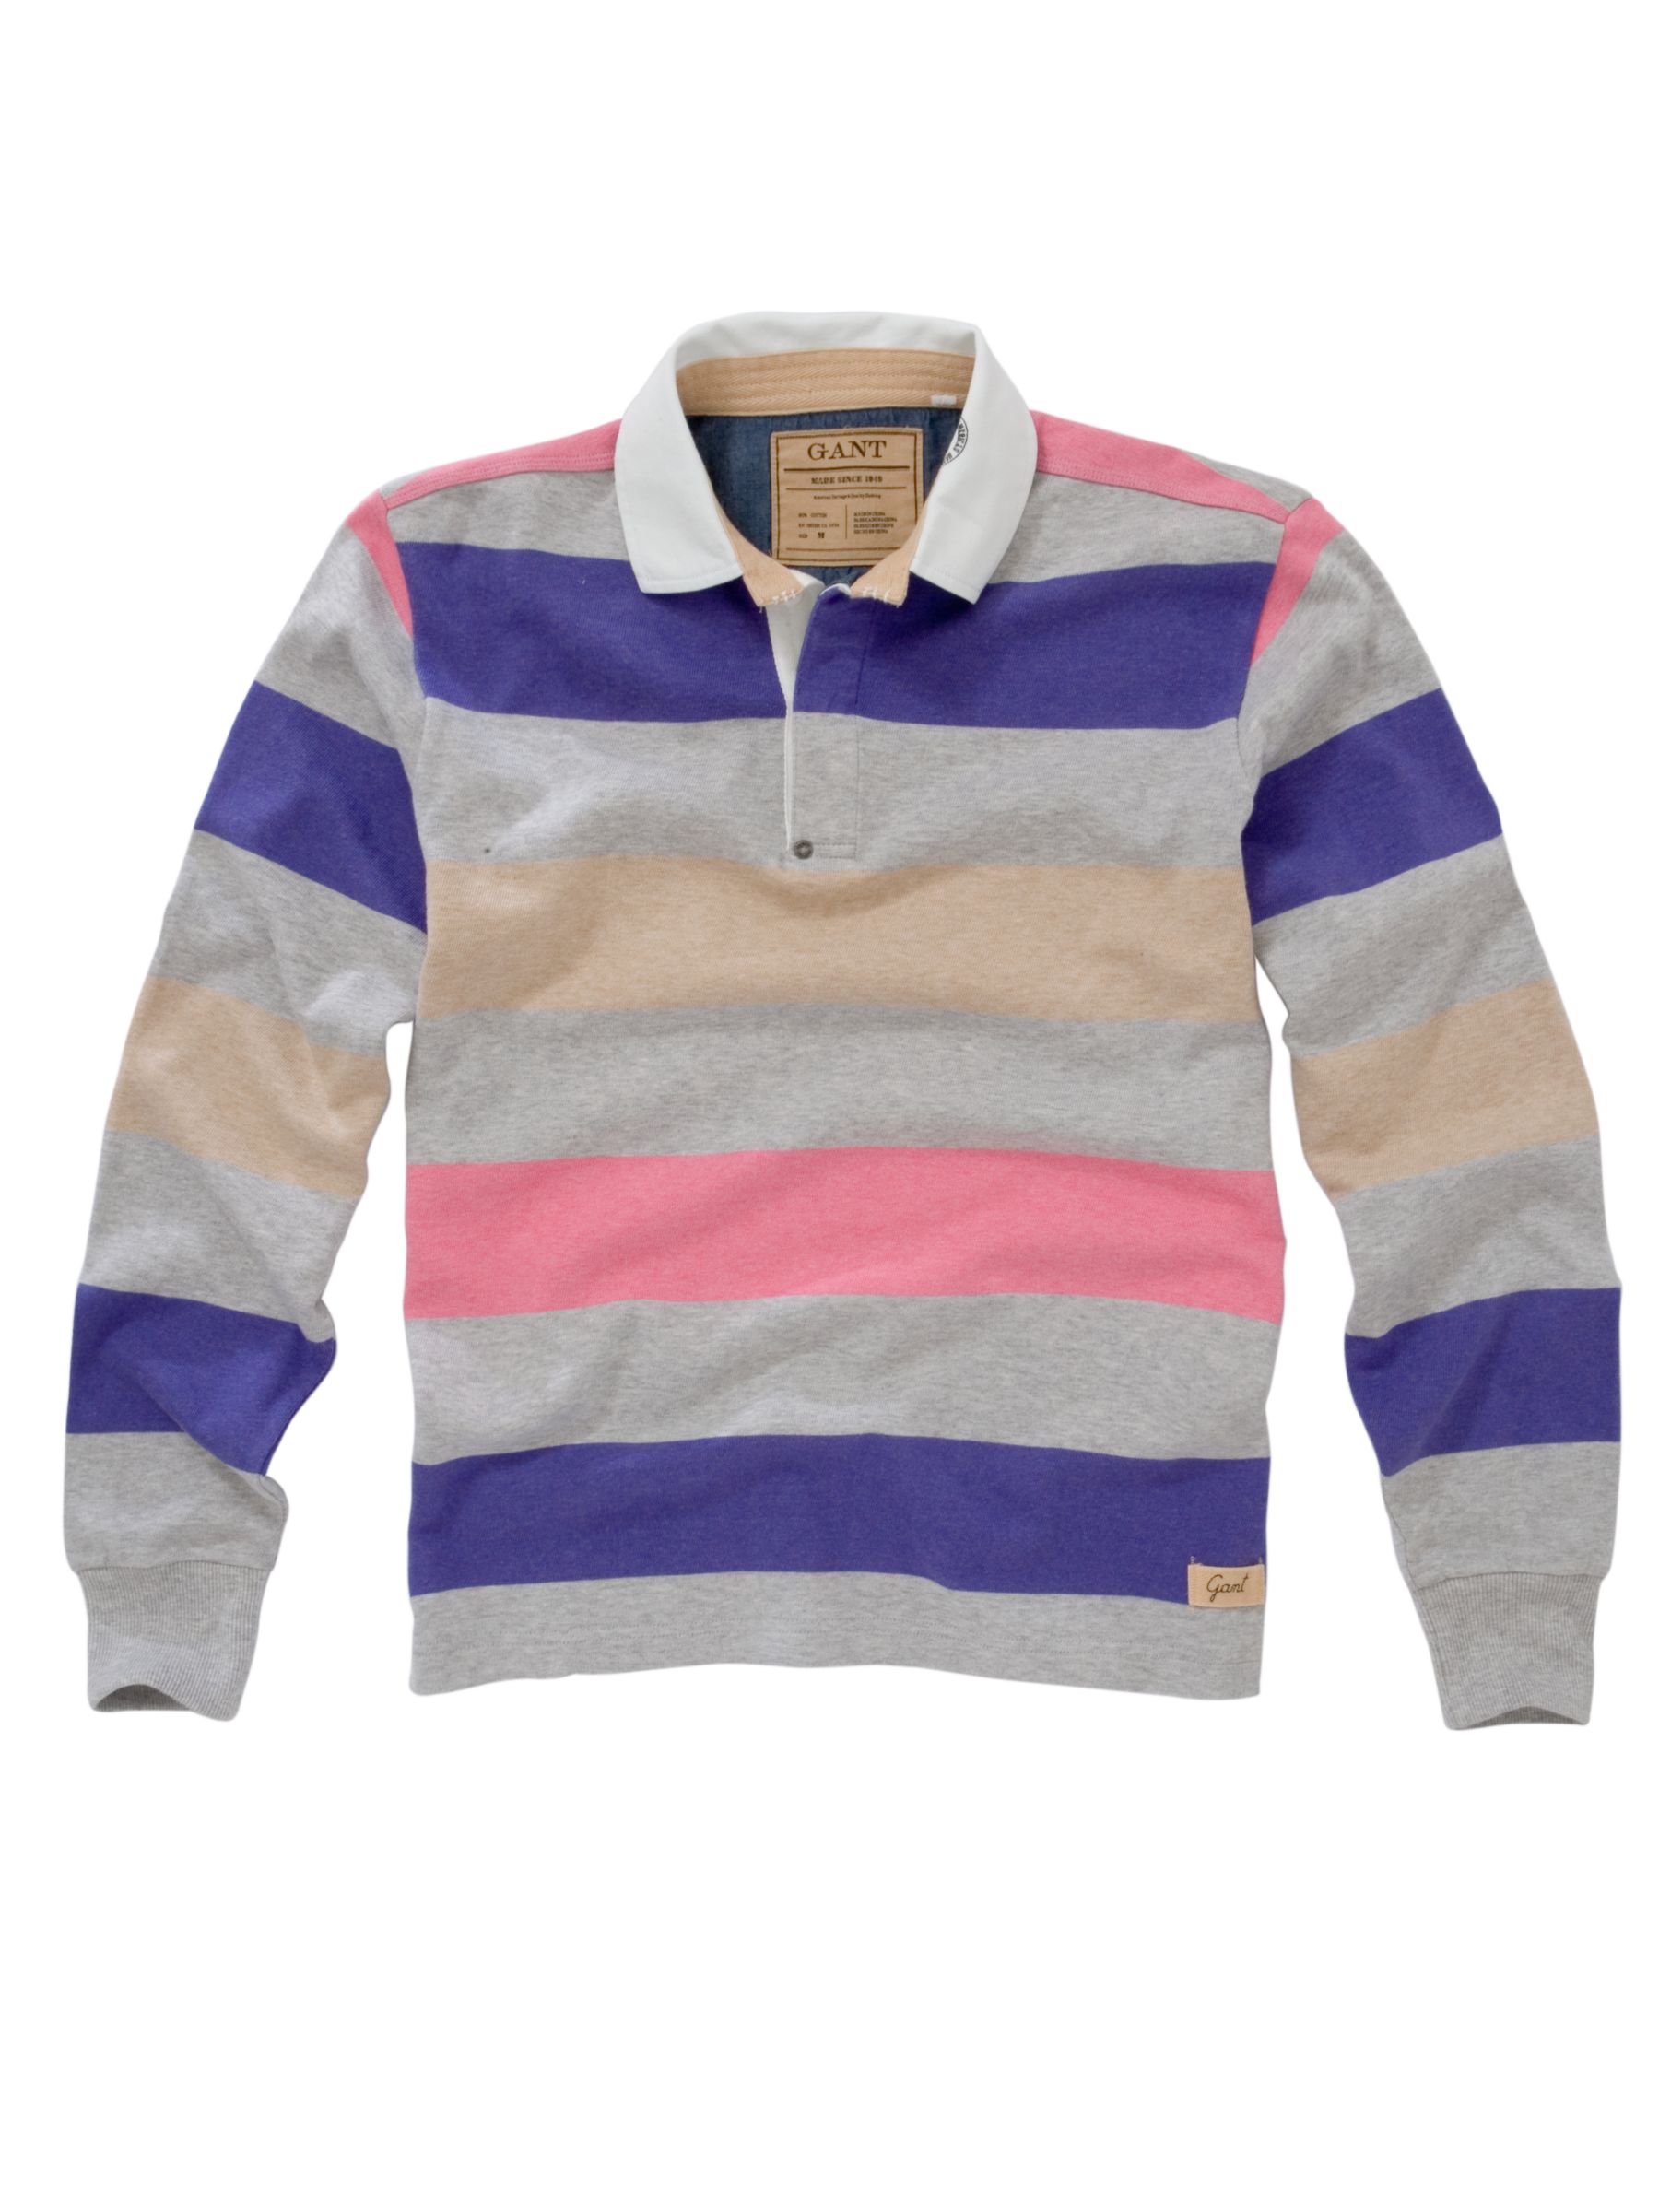 4-Colour Bar Stripe Rugby Shirt, Grey/purple